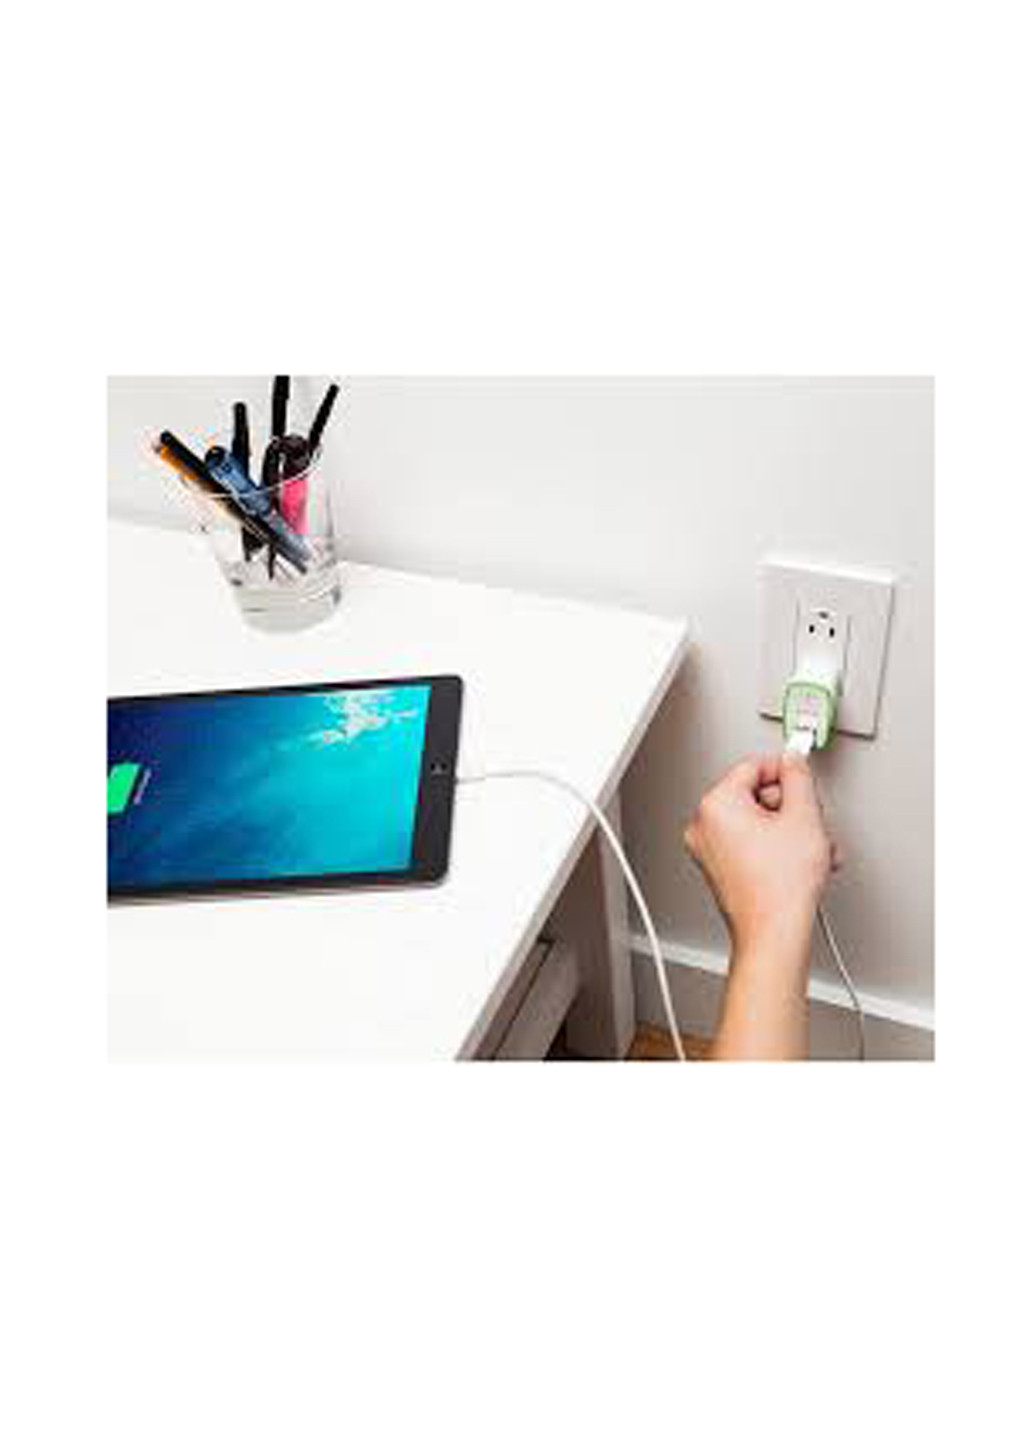 Мережеве ЗУ Belkin USB Home Charger (2.4Amp) c кабелем Lightening to USB-A, 1.2m, Wht (F8J125vf04-WHT) білий